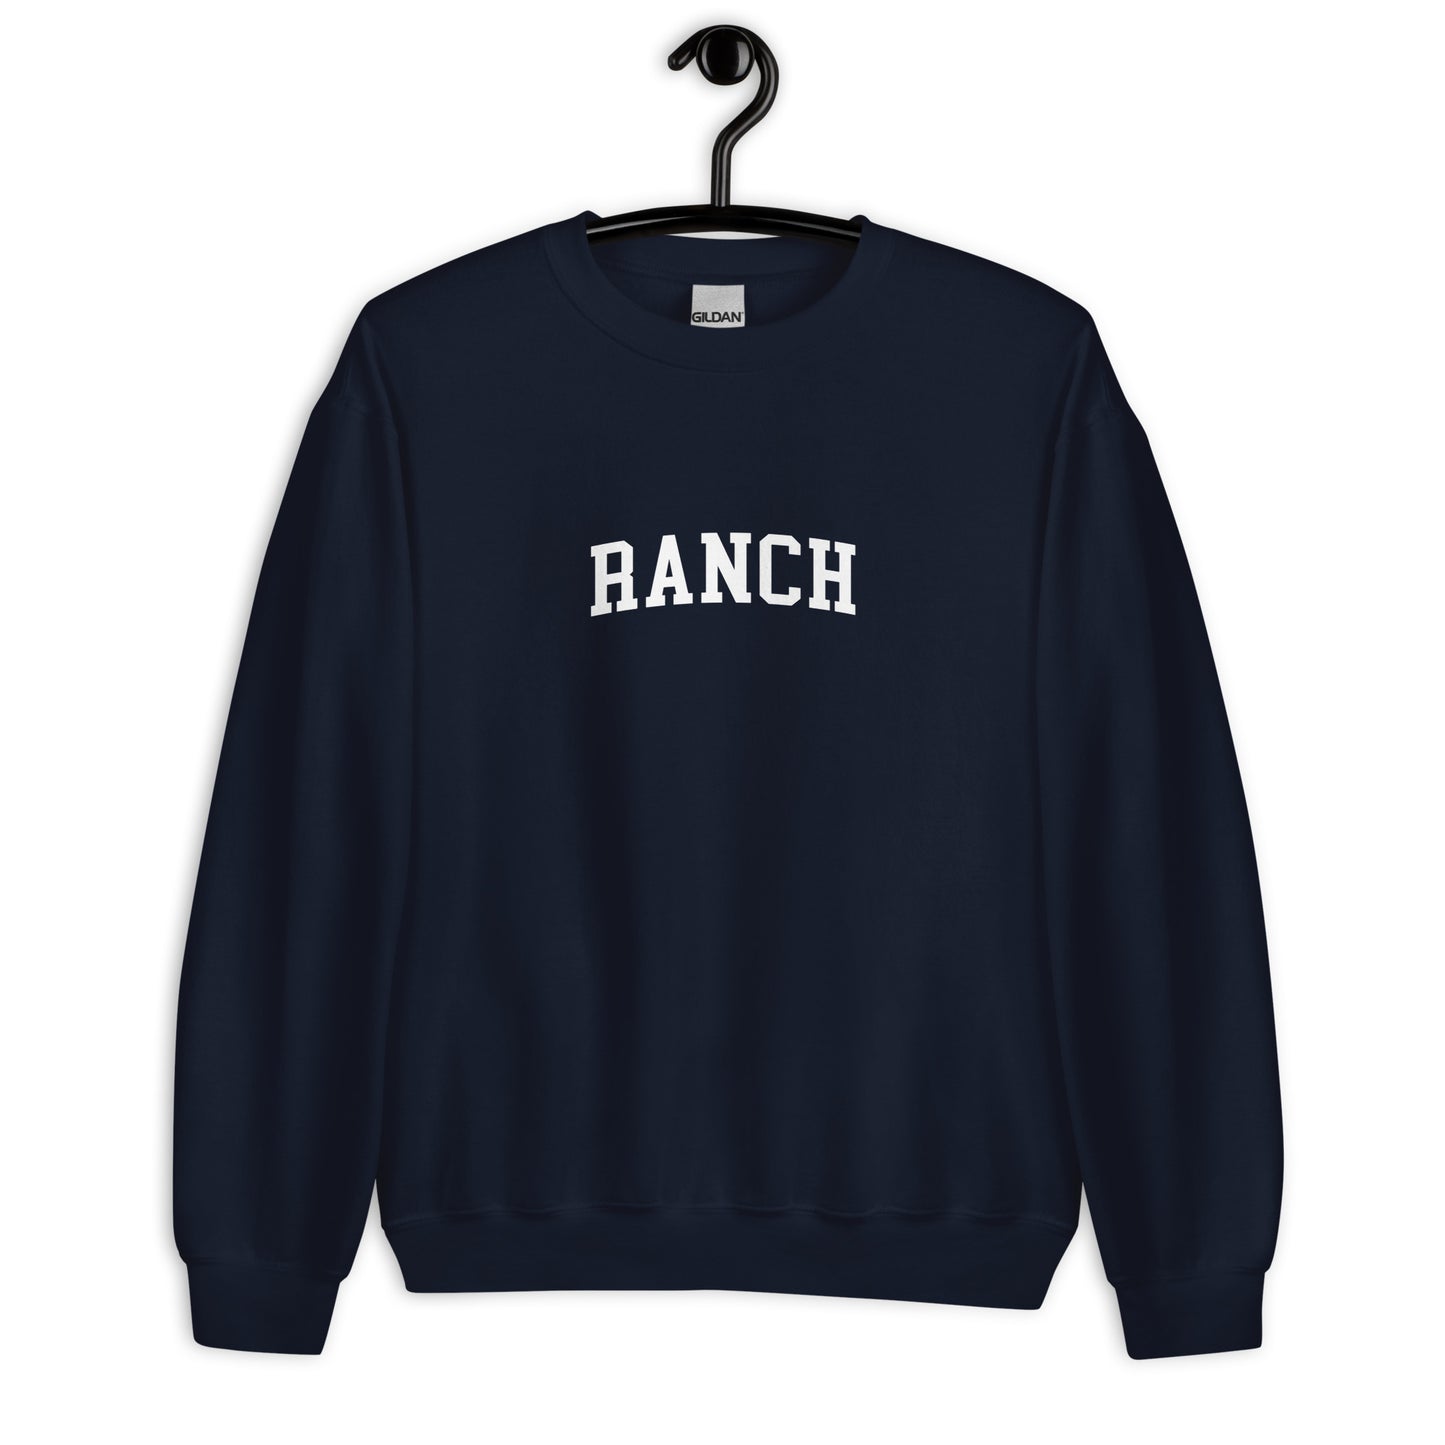 Ranch Sweatshirt - Arched Font